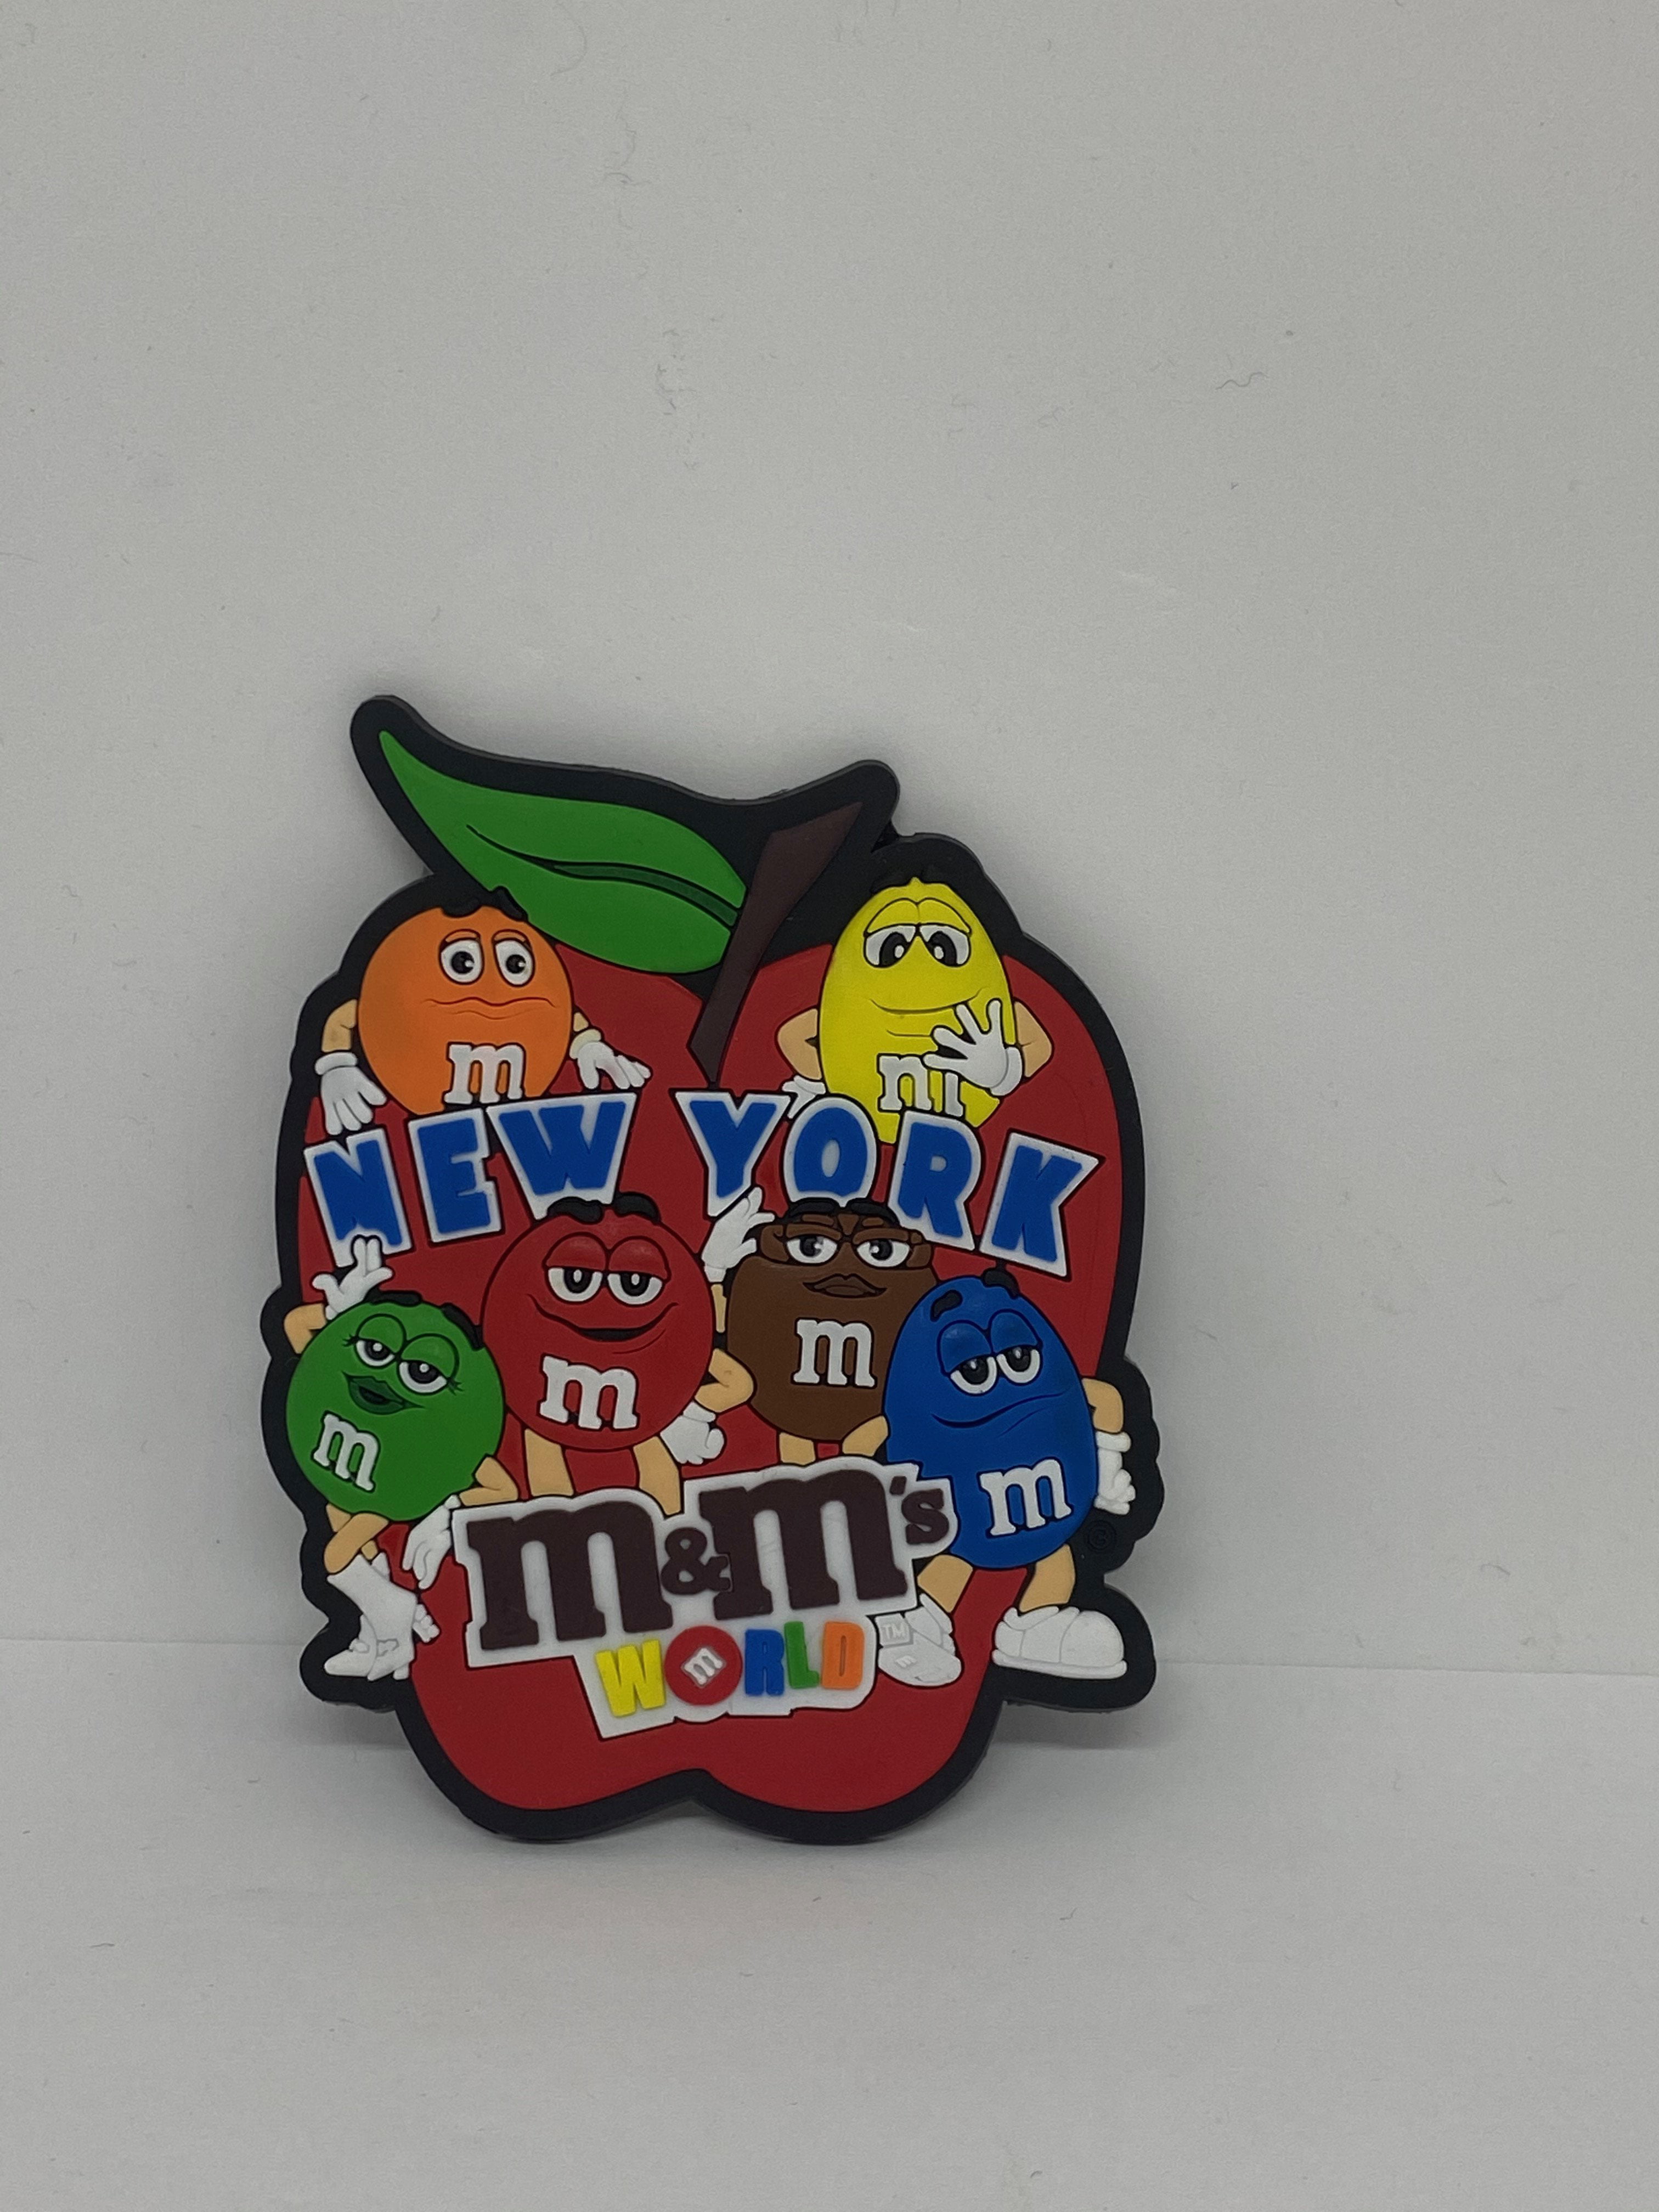 M&M's World New York